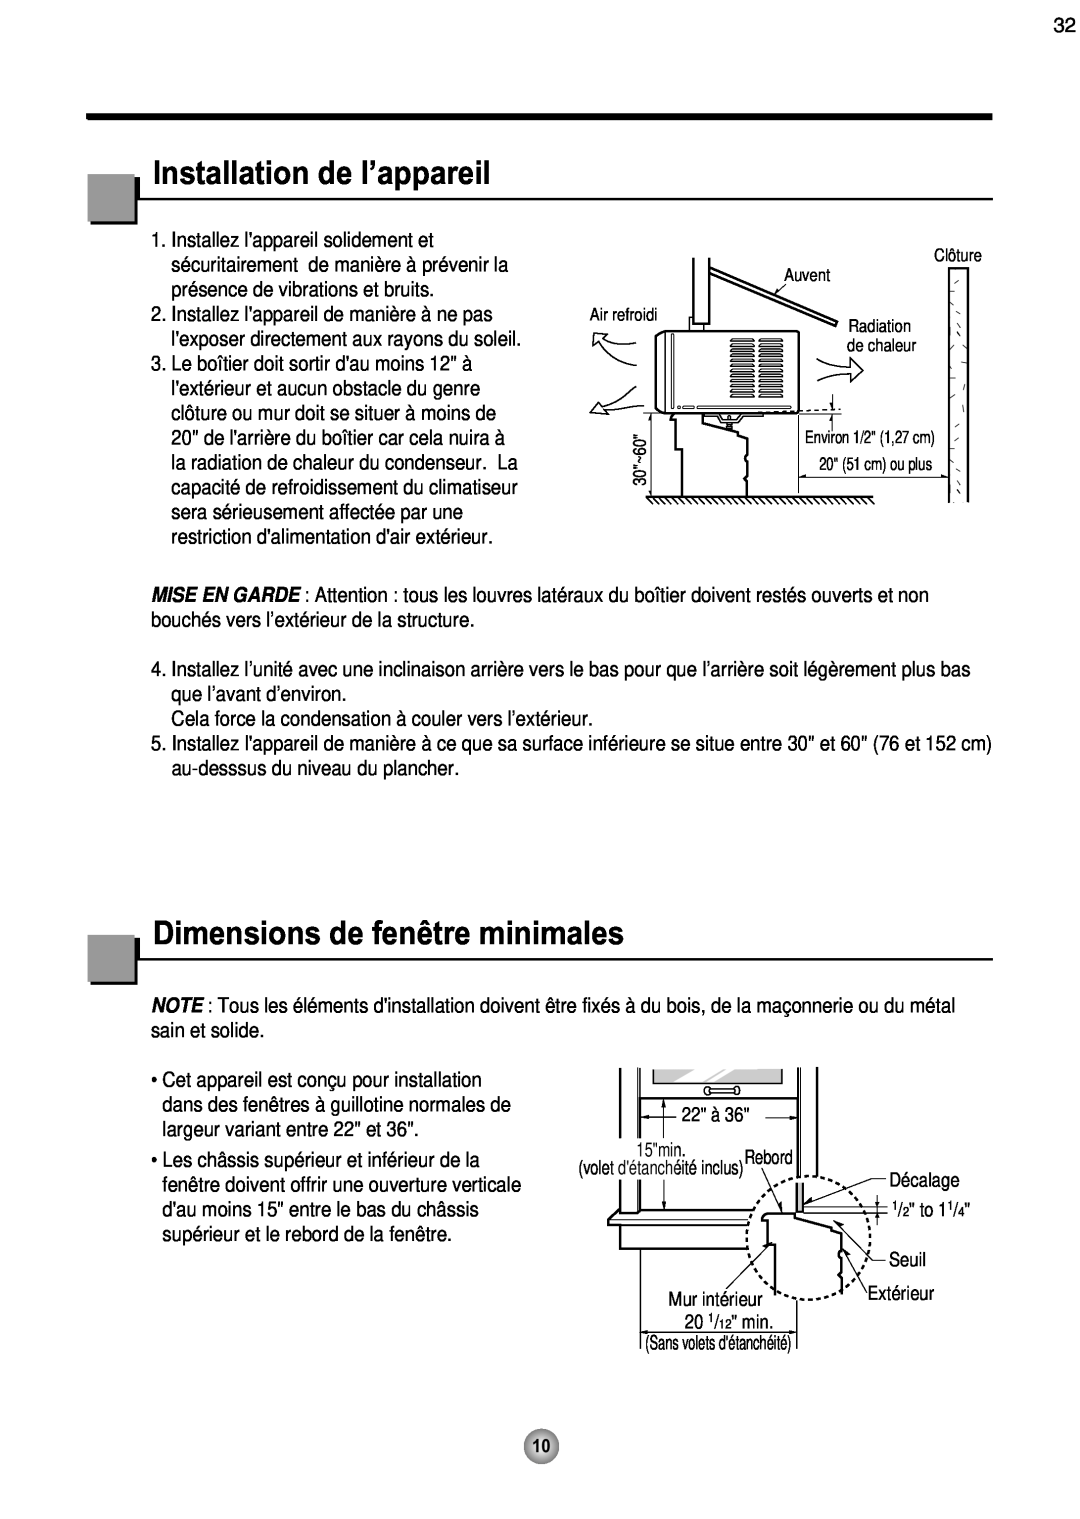 Friedrich CP08 operation manual Installation de l’appareil, Dimensions de fenêtre minimales 